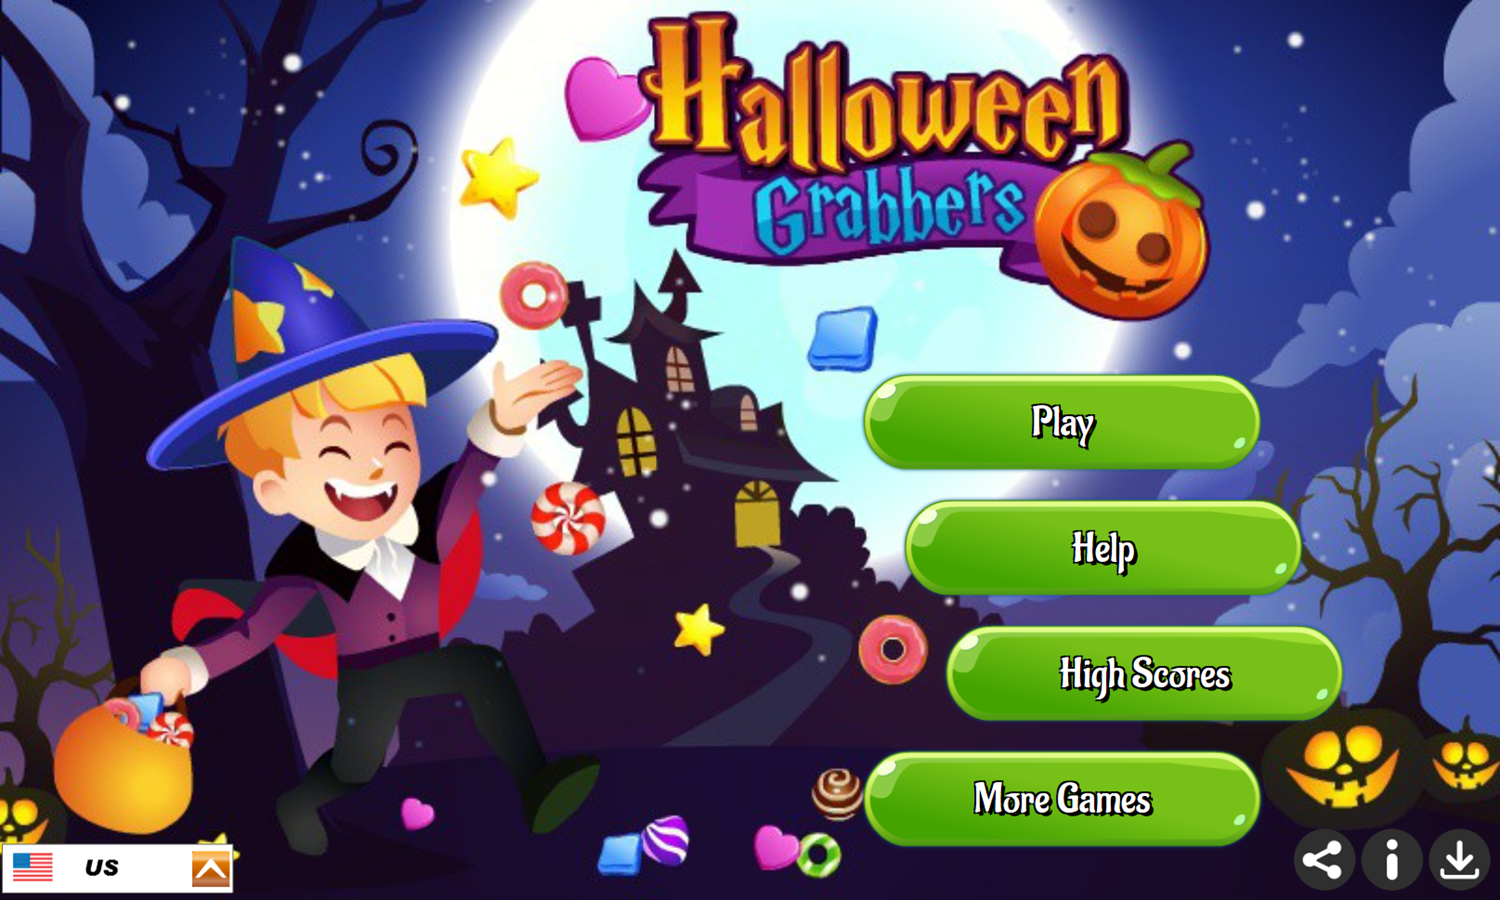 Halloween Grabbers Game Welcome Screen Screenshot.